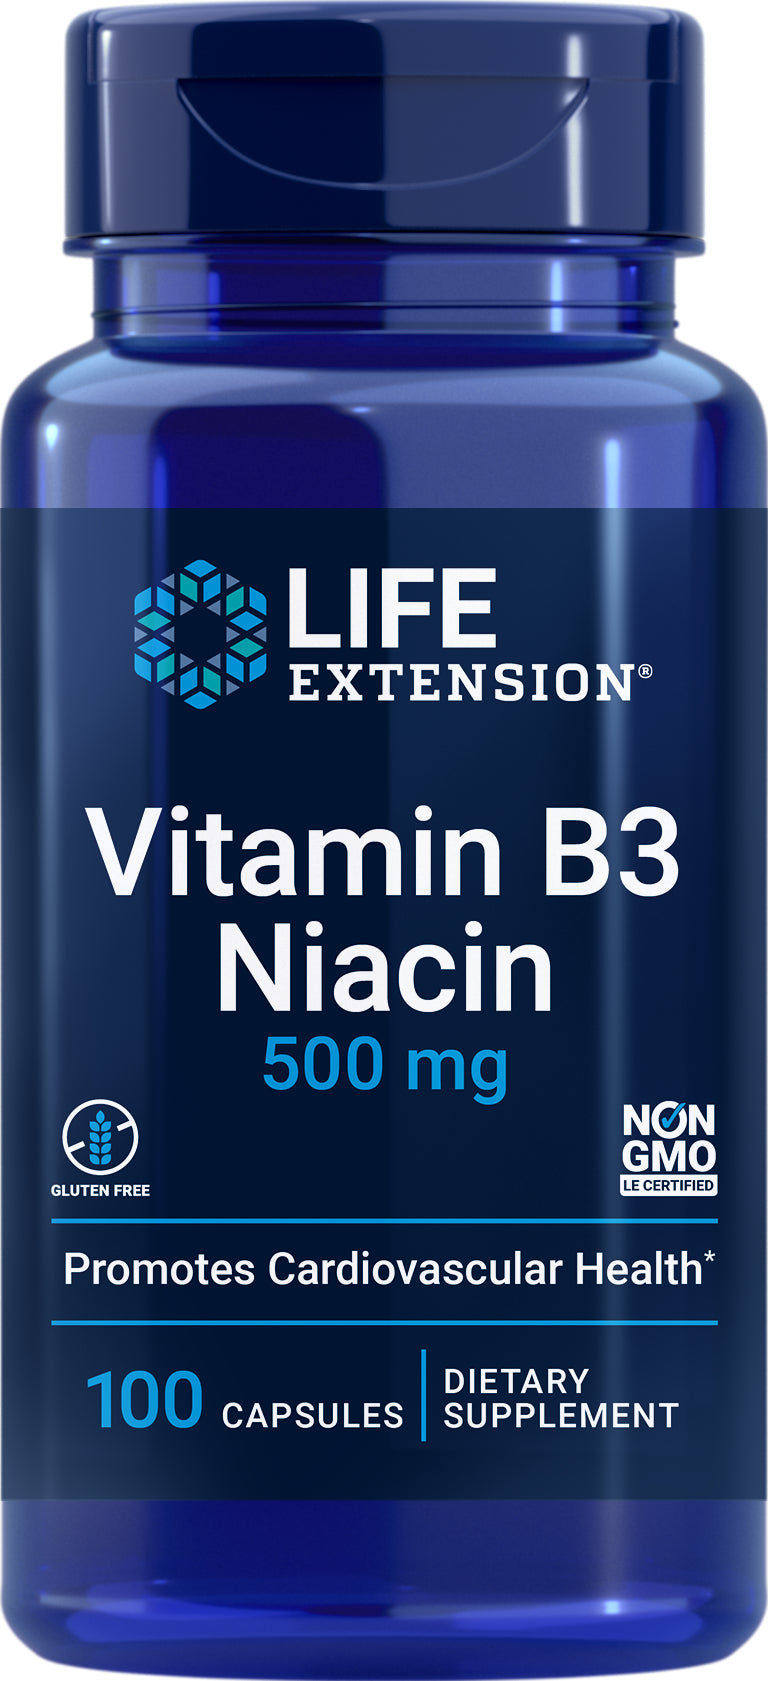 Vitamin B3 Niacin 500 mg, 100 caps by Life Extension